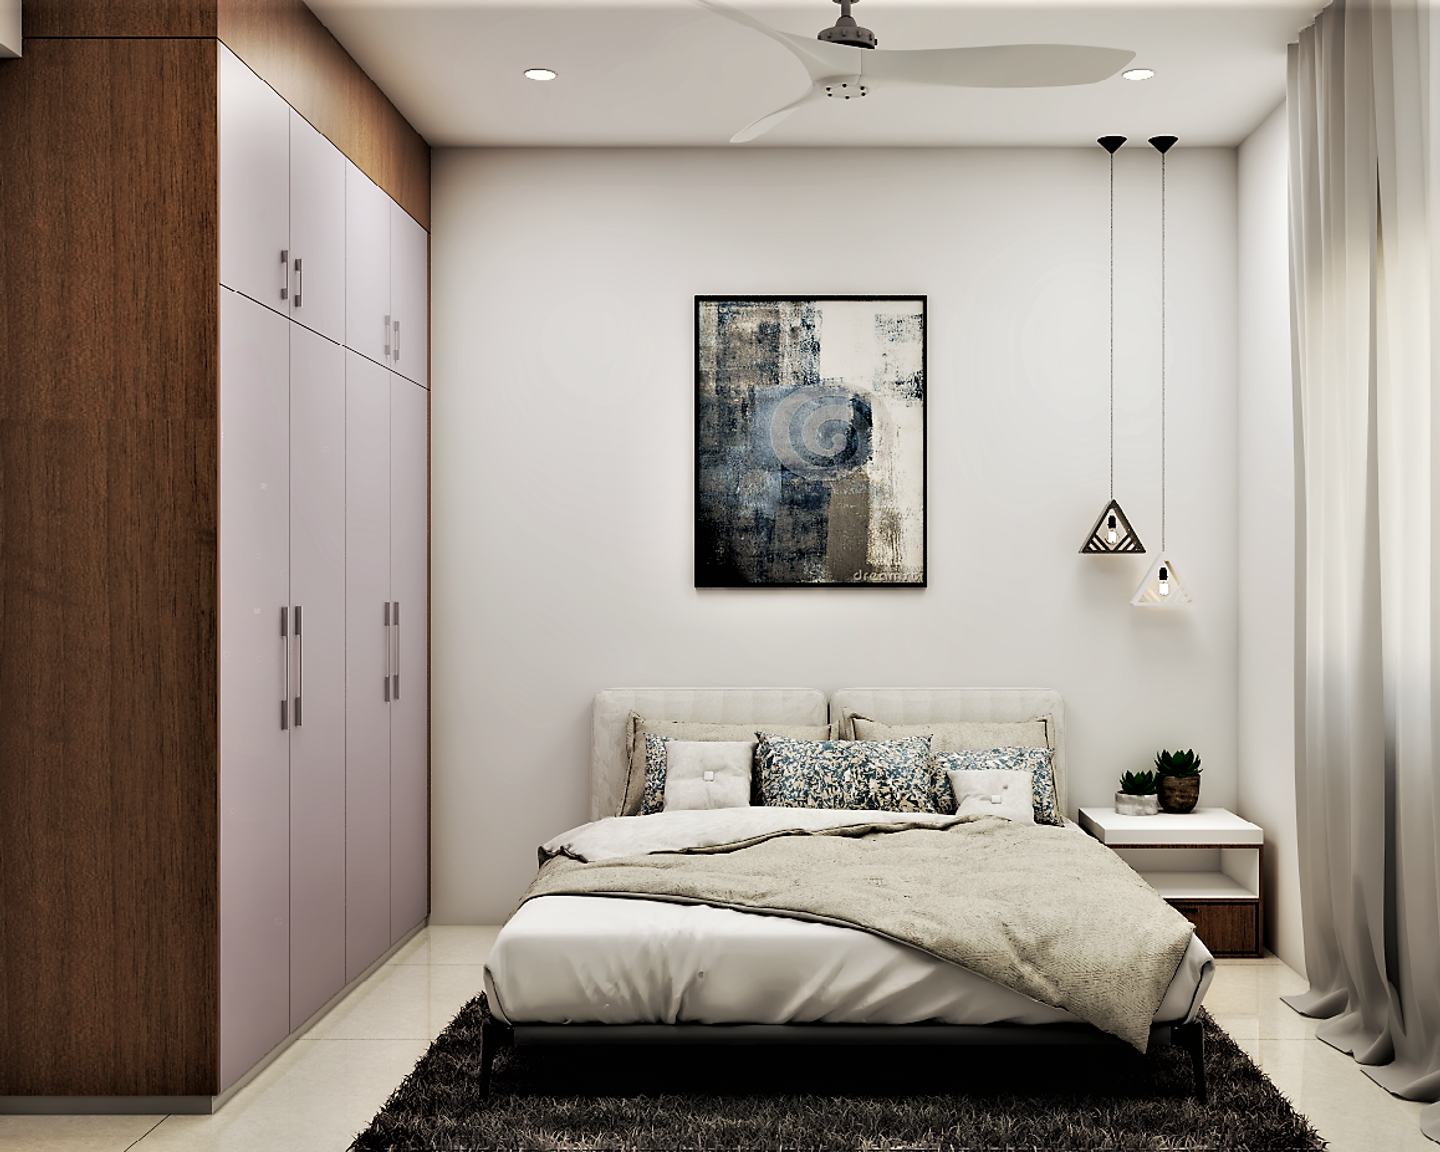 Modern Light Pinkish Bedroom - Livspace